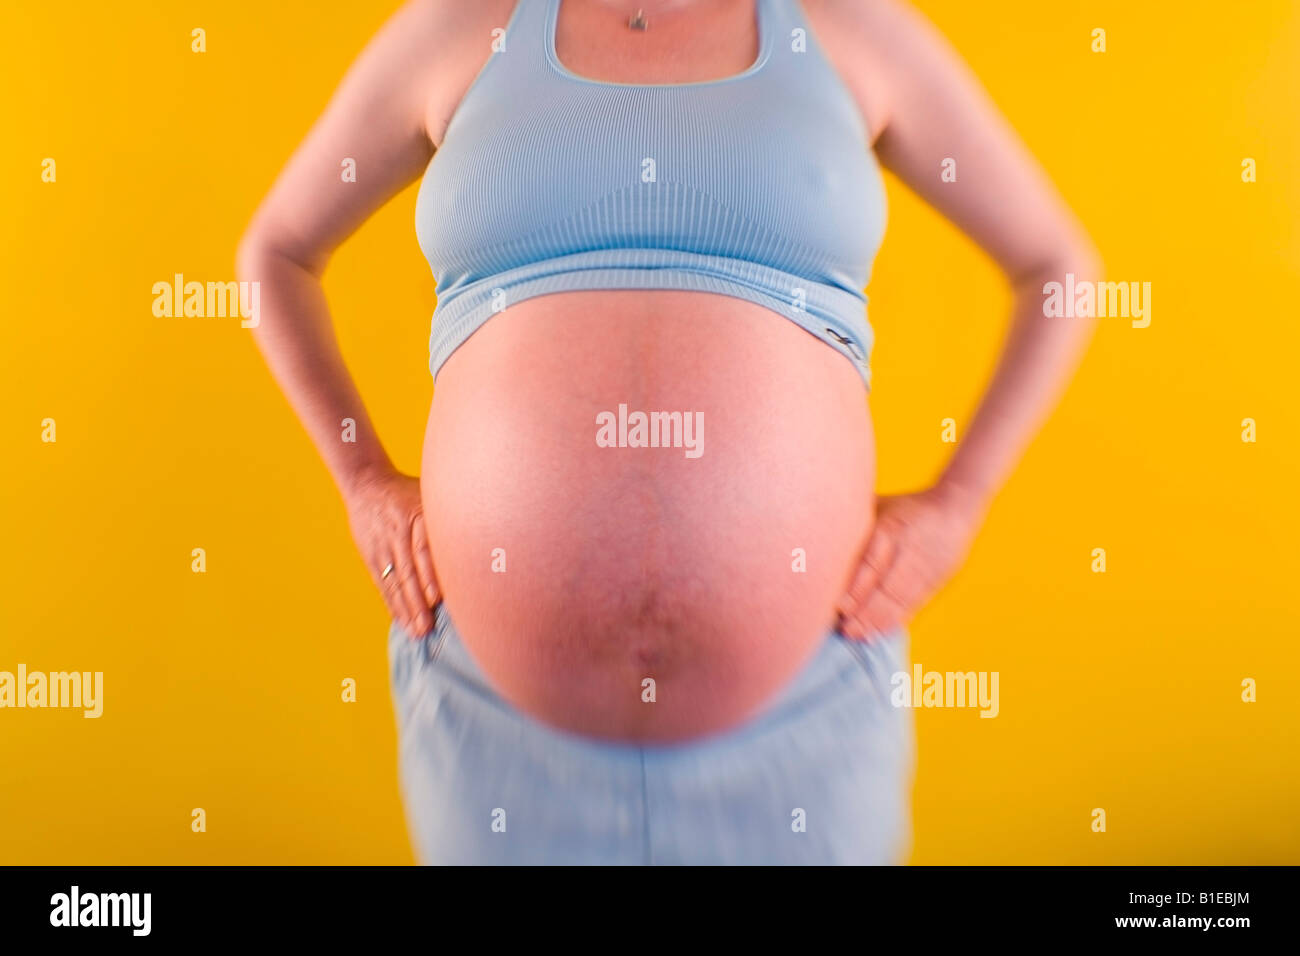 Woman with large hips stock photo. Image of feminine - 146935882